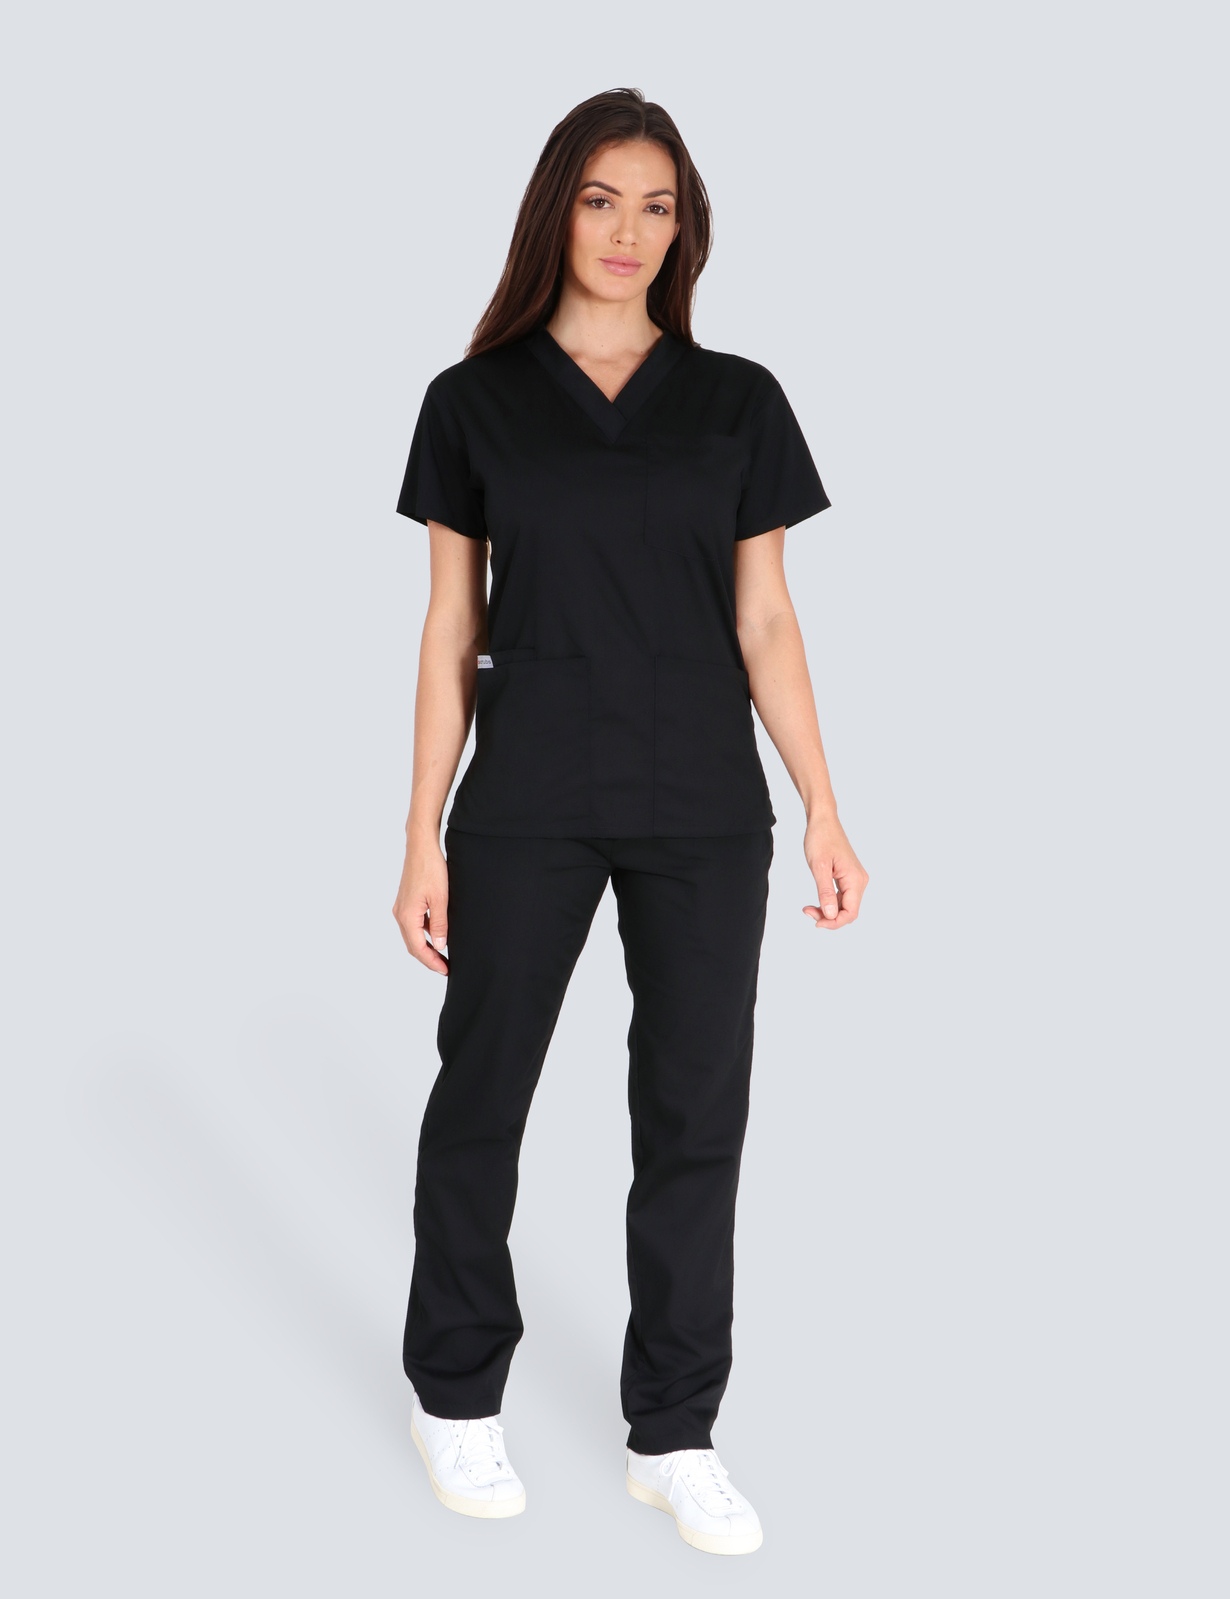 Redland Hospital - ED Doctor (4 Pocket Scrub Top and Regular Pants in Black incl Logos)